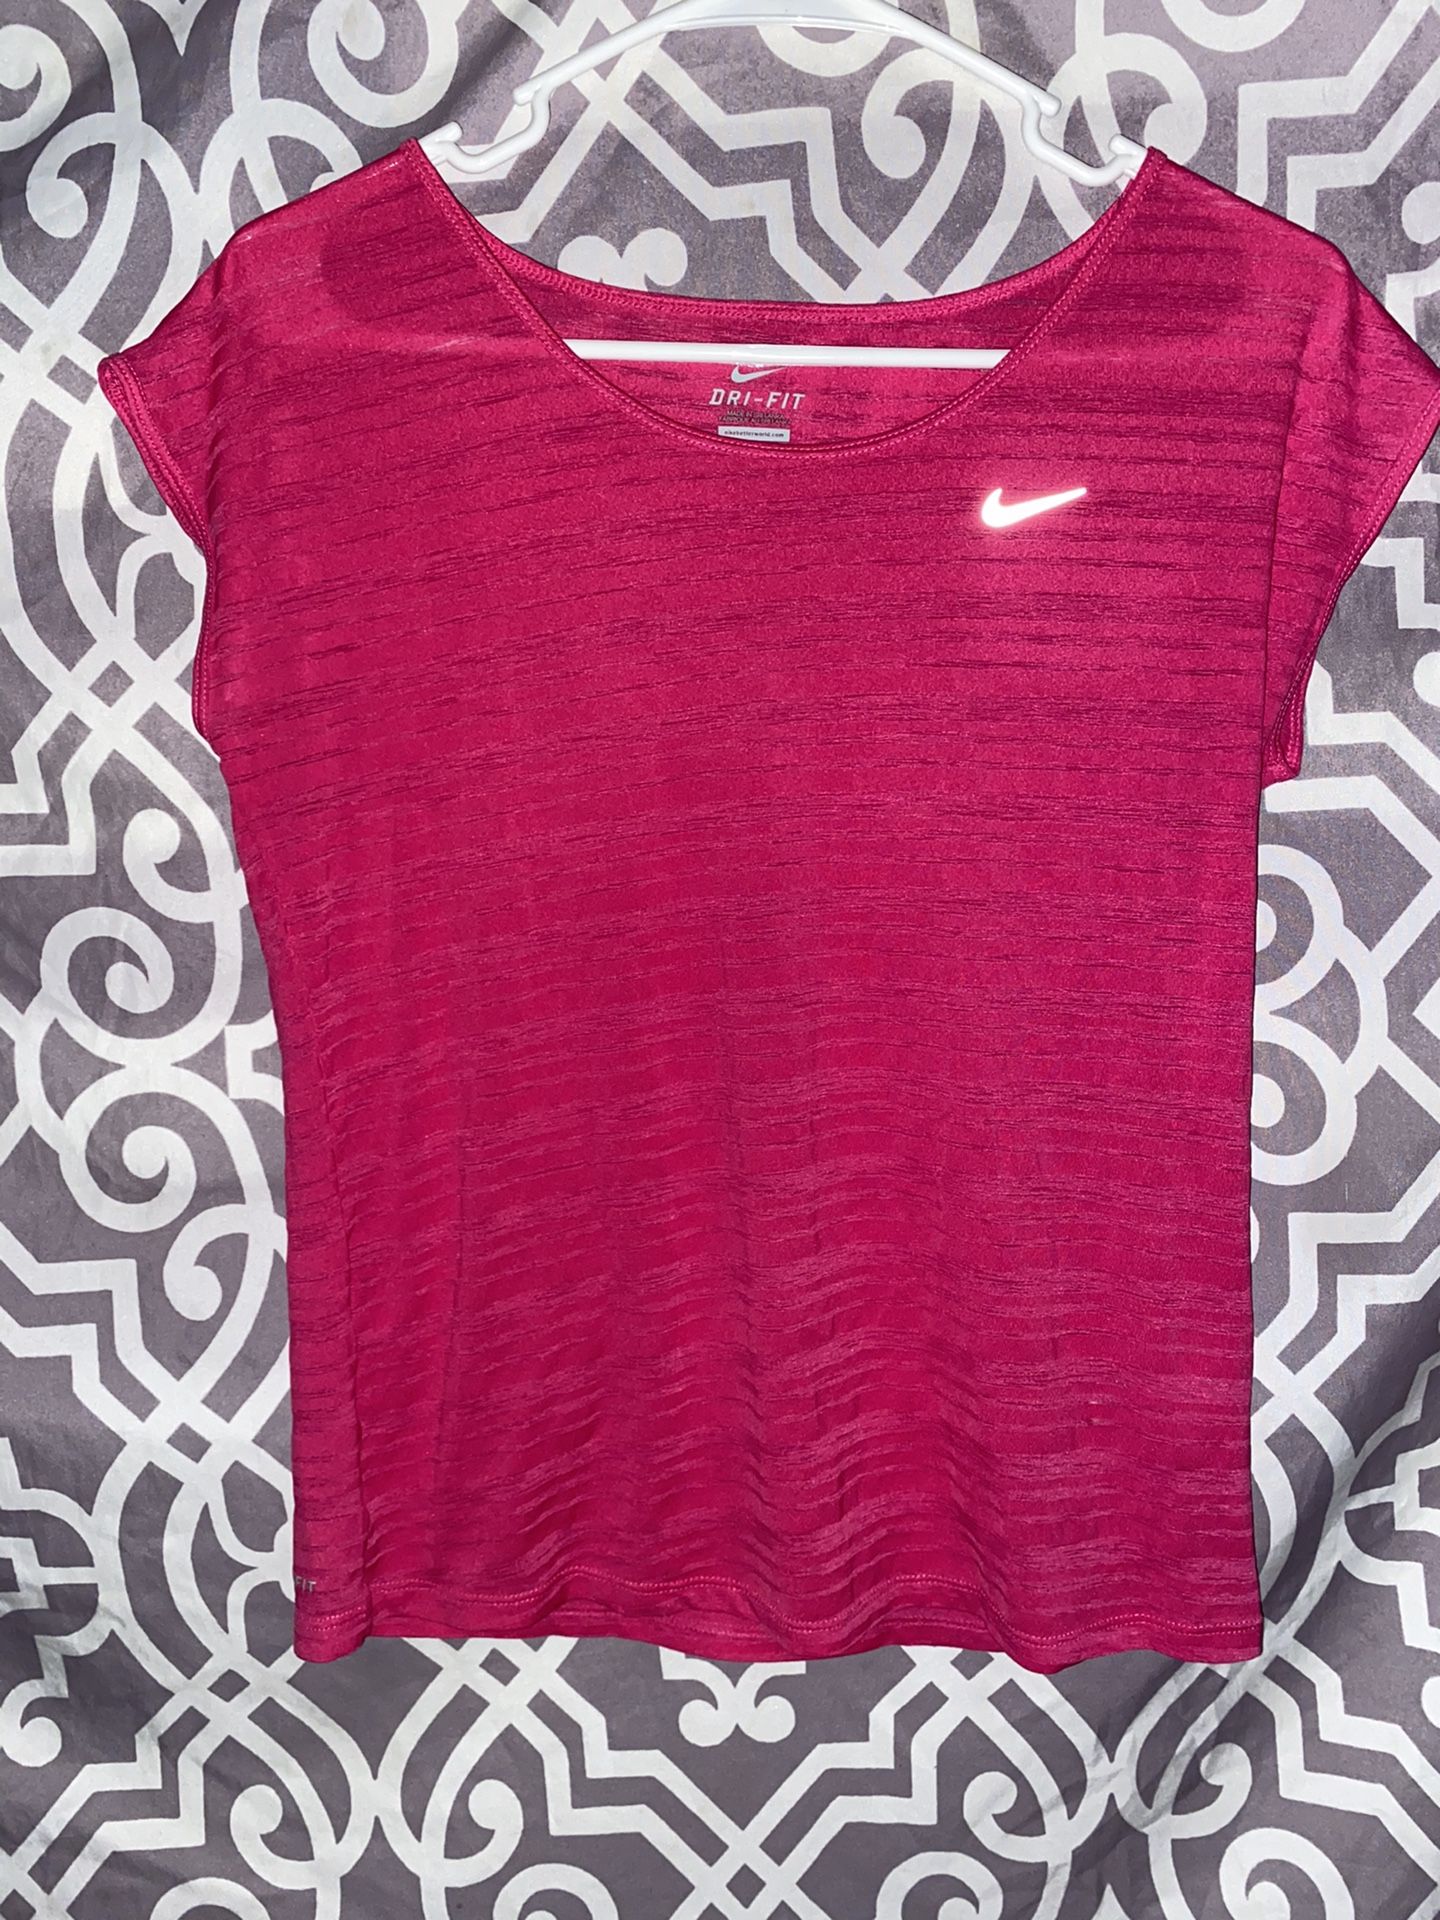 Size Small Nike Striped Hot Pink Gym T Shirt Fitness Basic Yoga